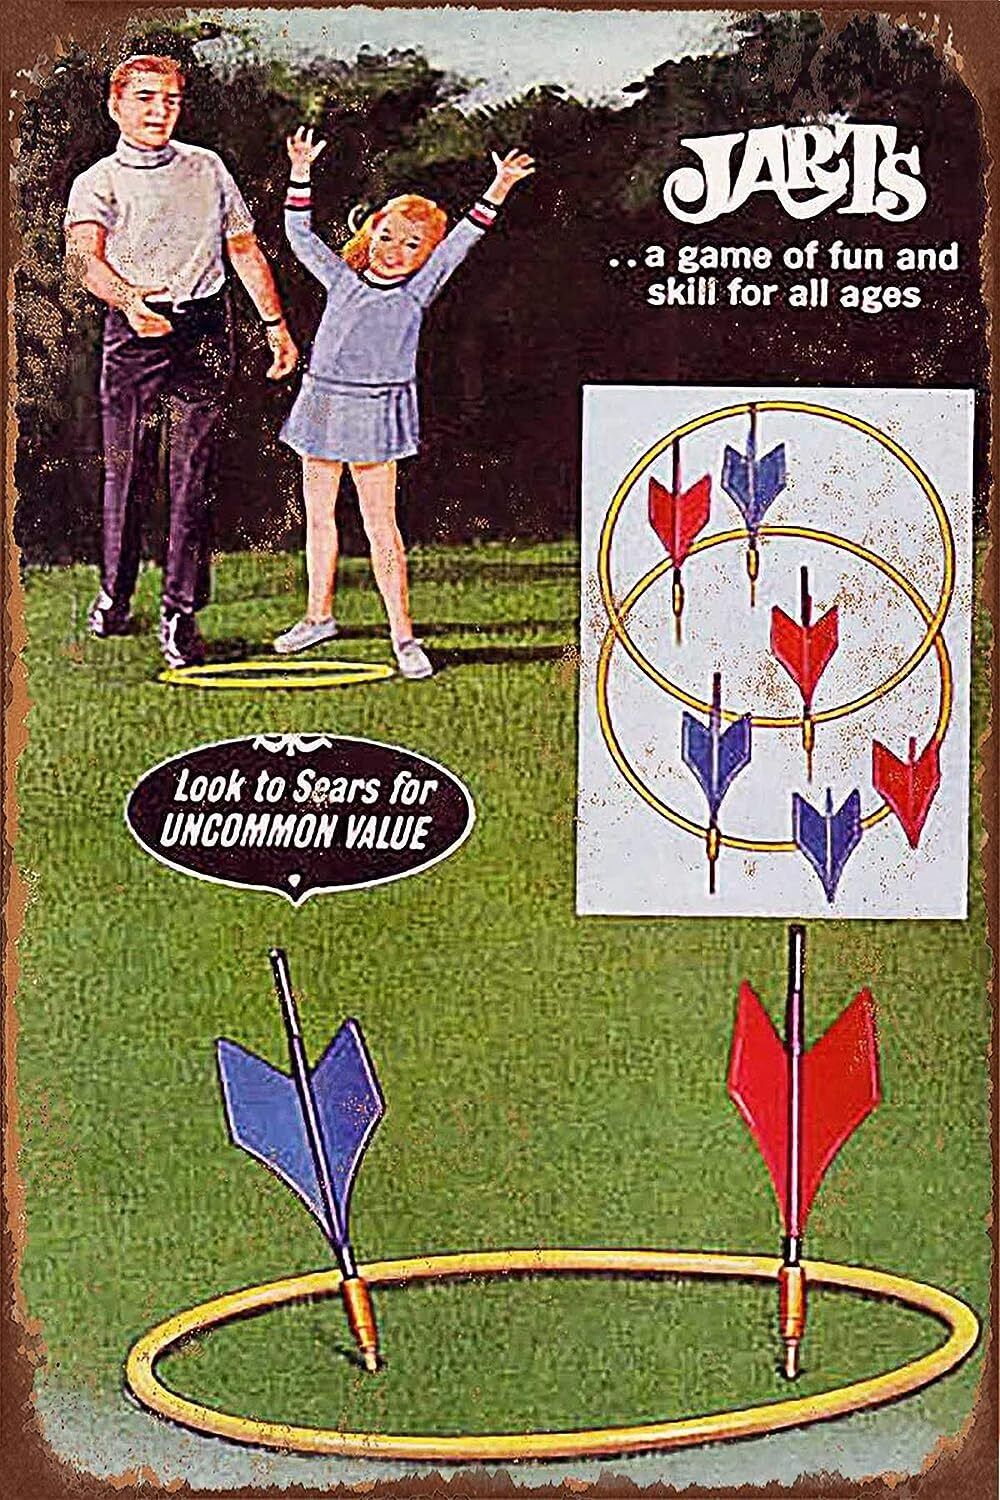 Gran Cartel De Chapa De Aluminio 1969 Jarts Lawn Darts Game Vintage L SIGN ONL